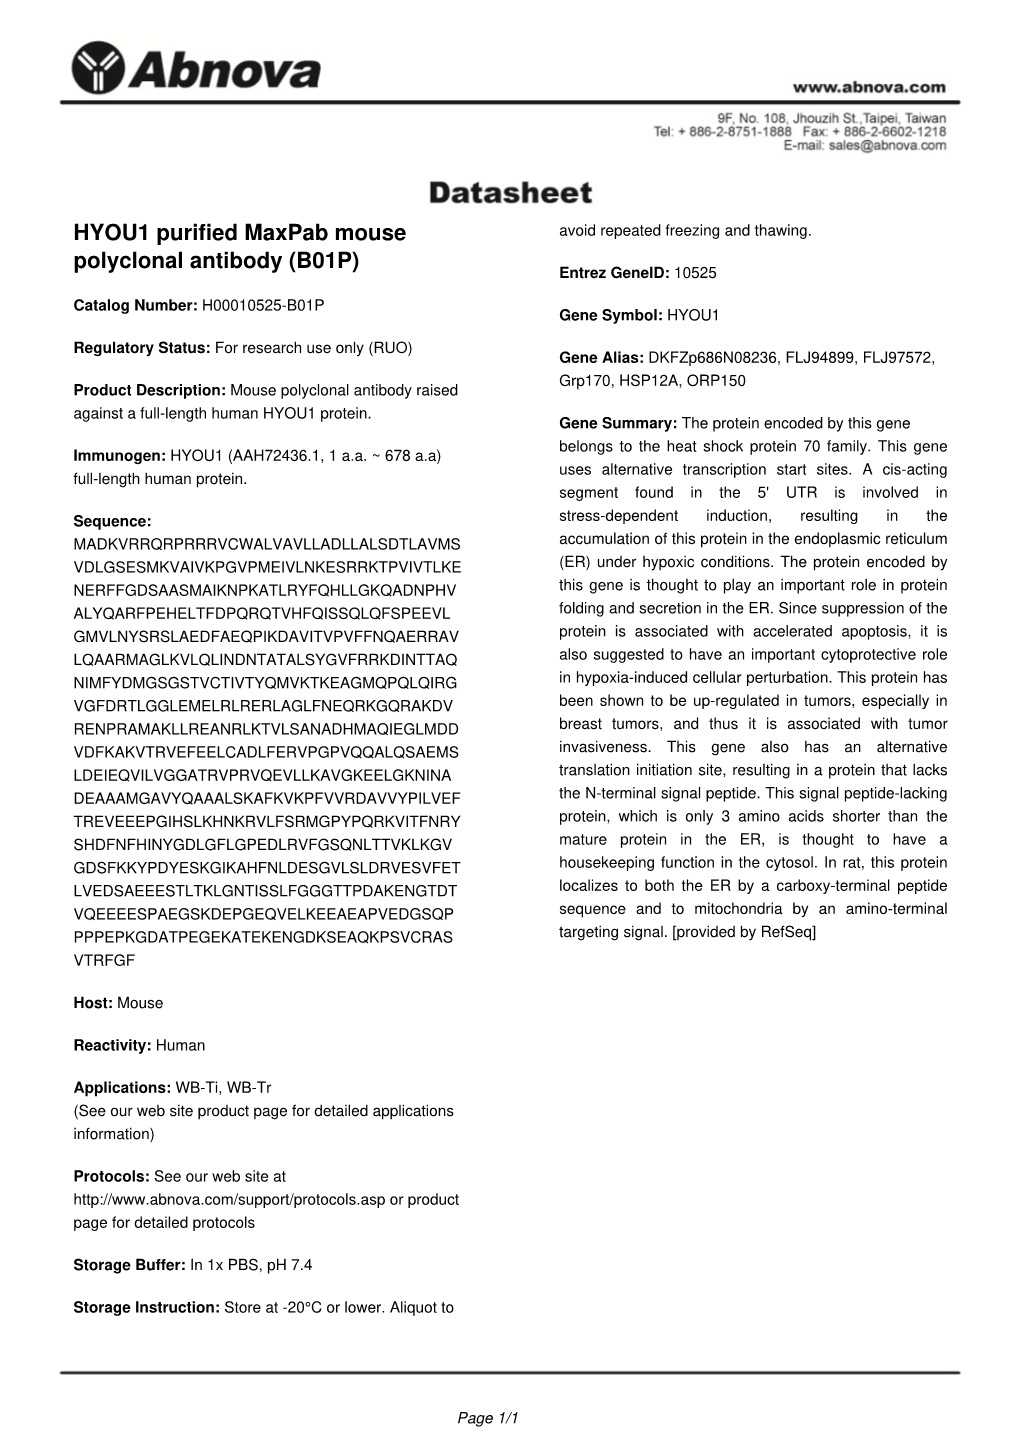 HYOU1 Purified Maxpab Mouse Polyclonal Antibody (B01P)